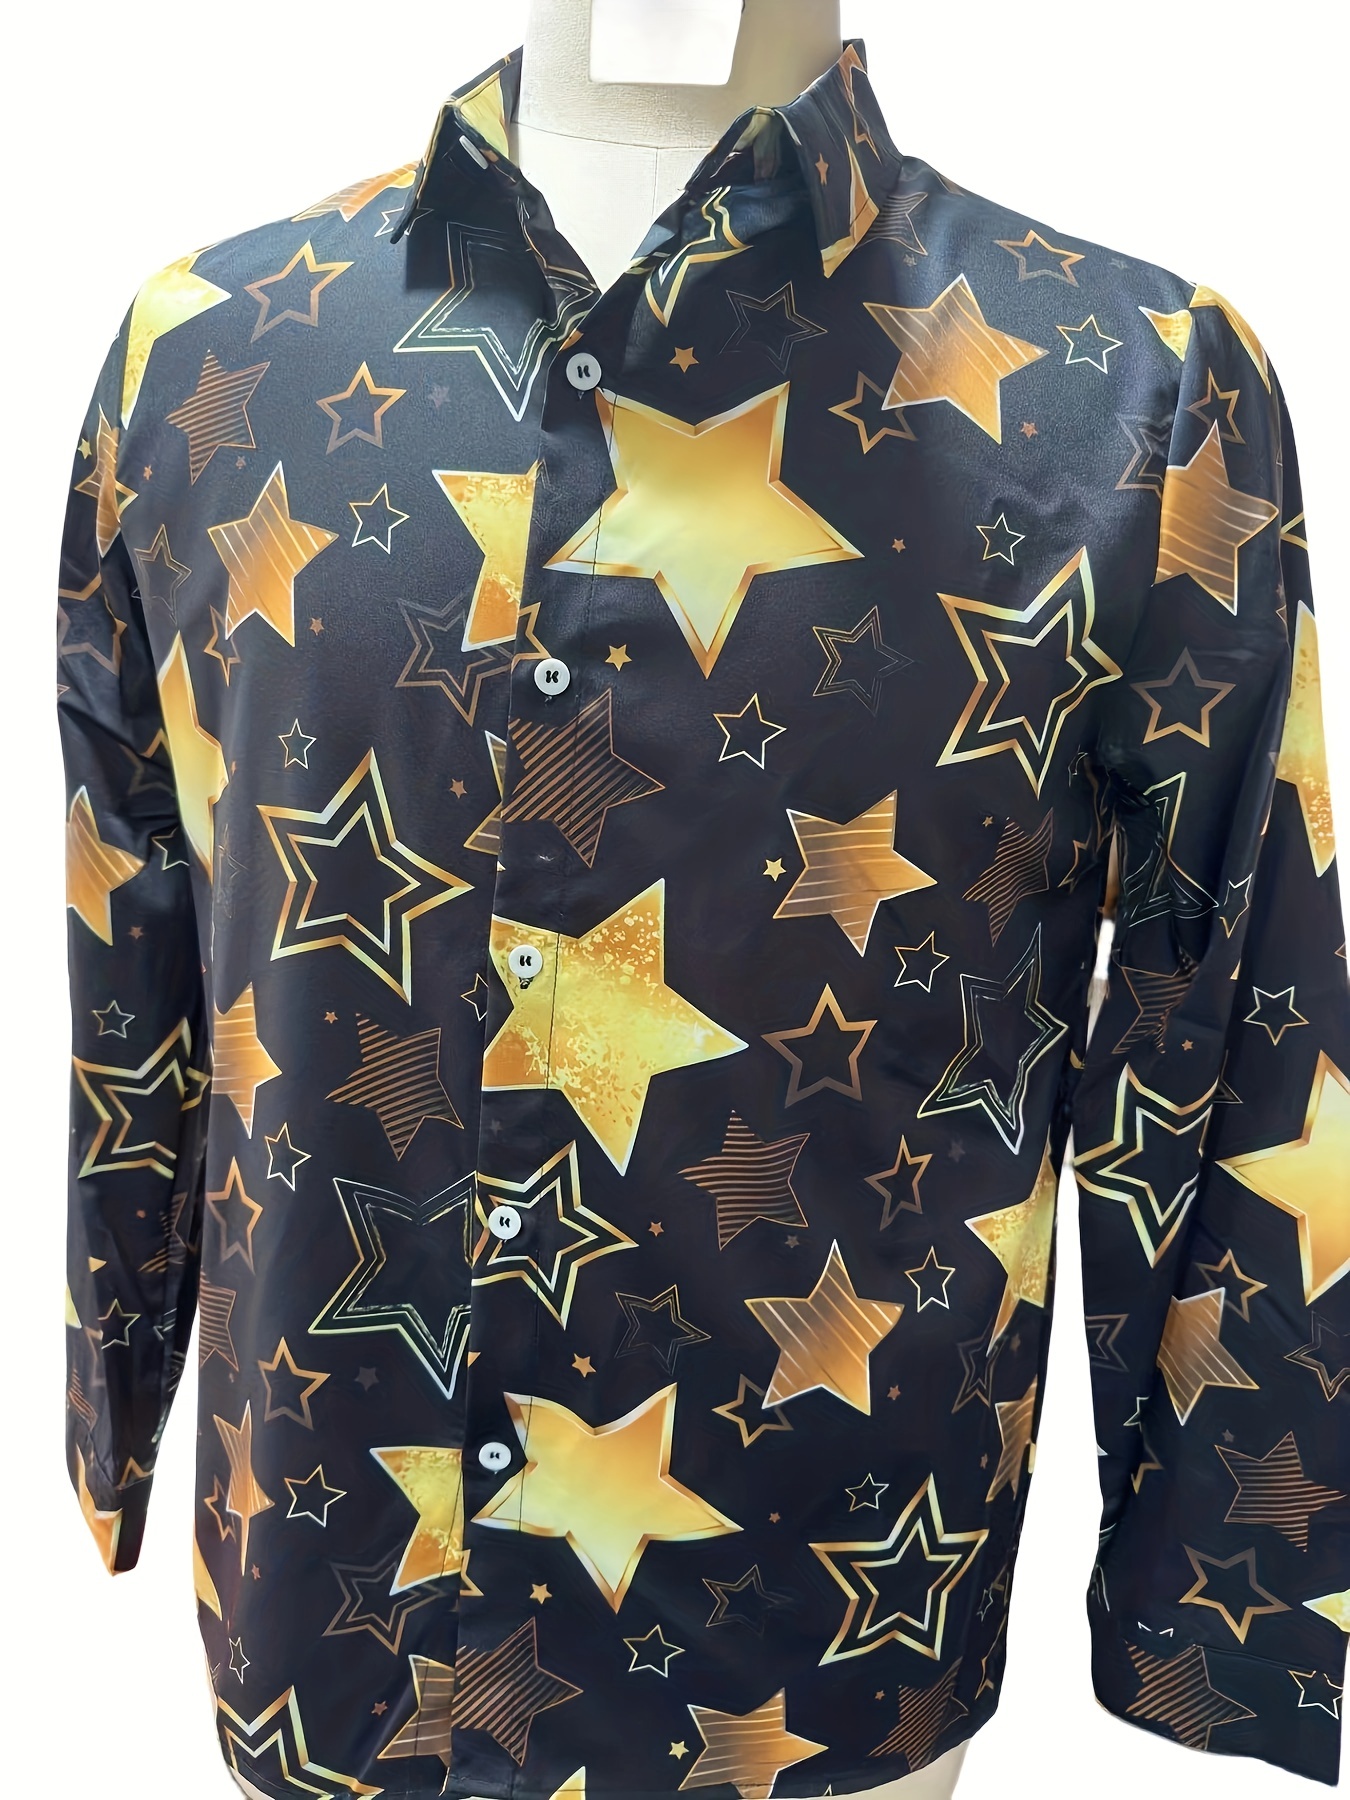 stars pattern mens long sleeve lapel shirt mens trendy button up shirt for spring fall outdoor